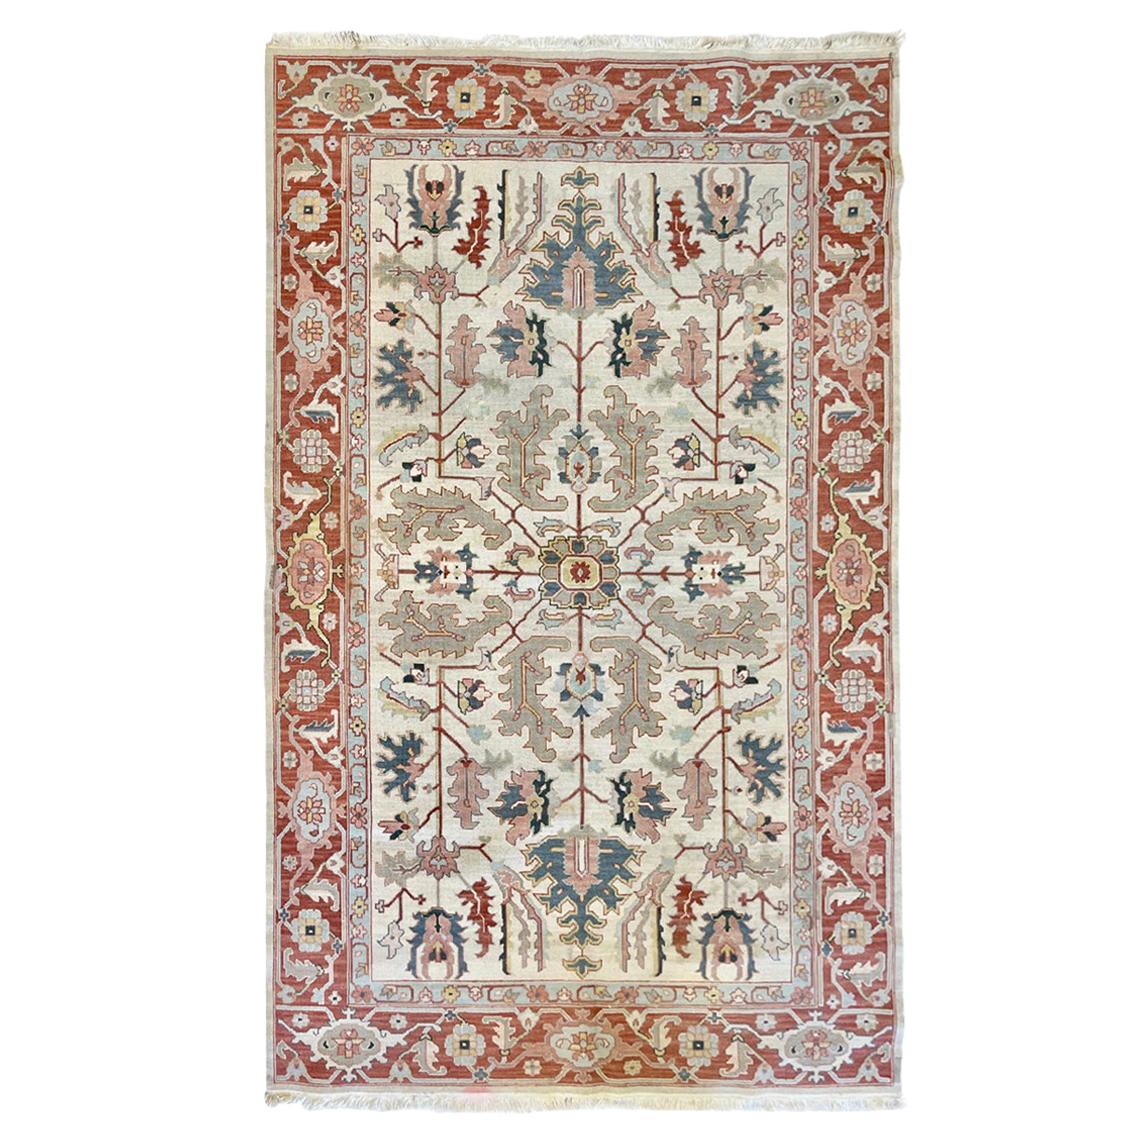 Very Fine Semi-Antique Heriz Serapi Soumak Carpet